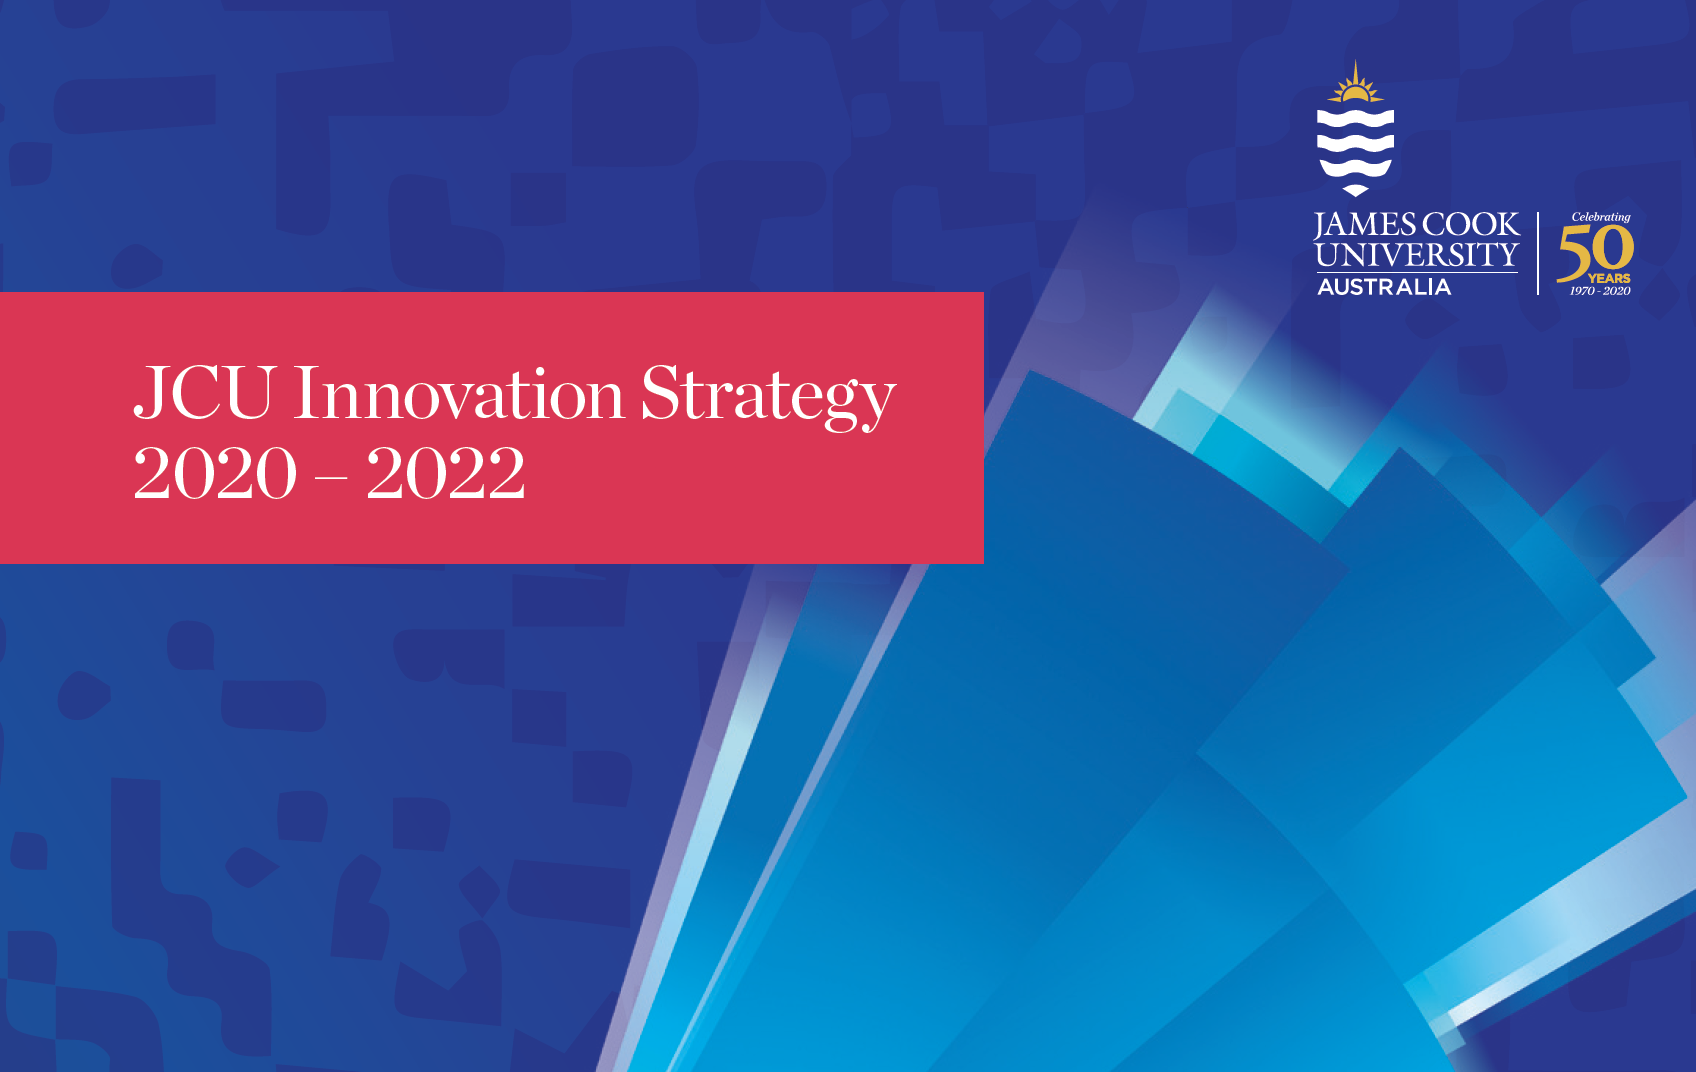 JCU创新战略覆盖2020- 2022